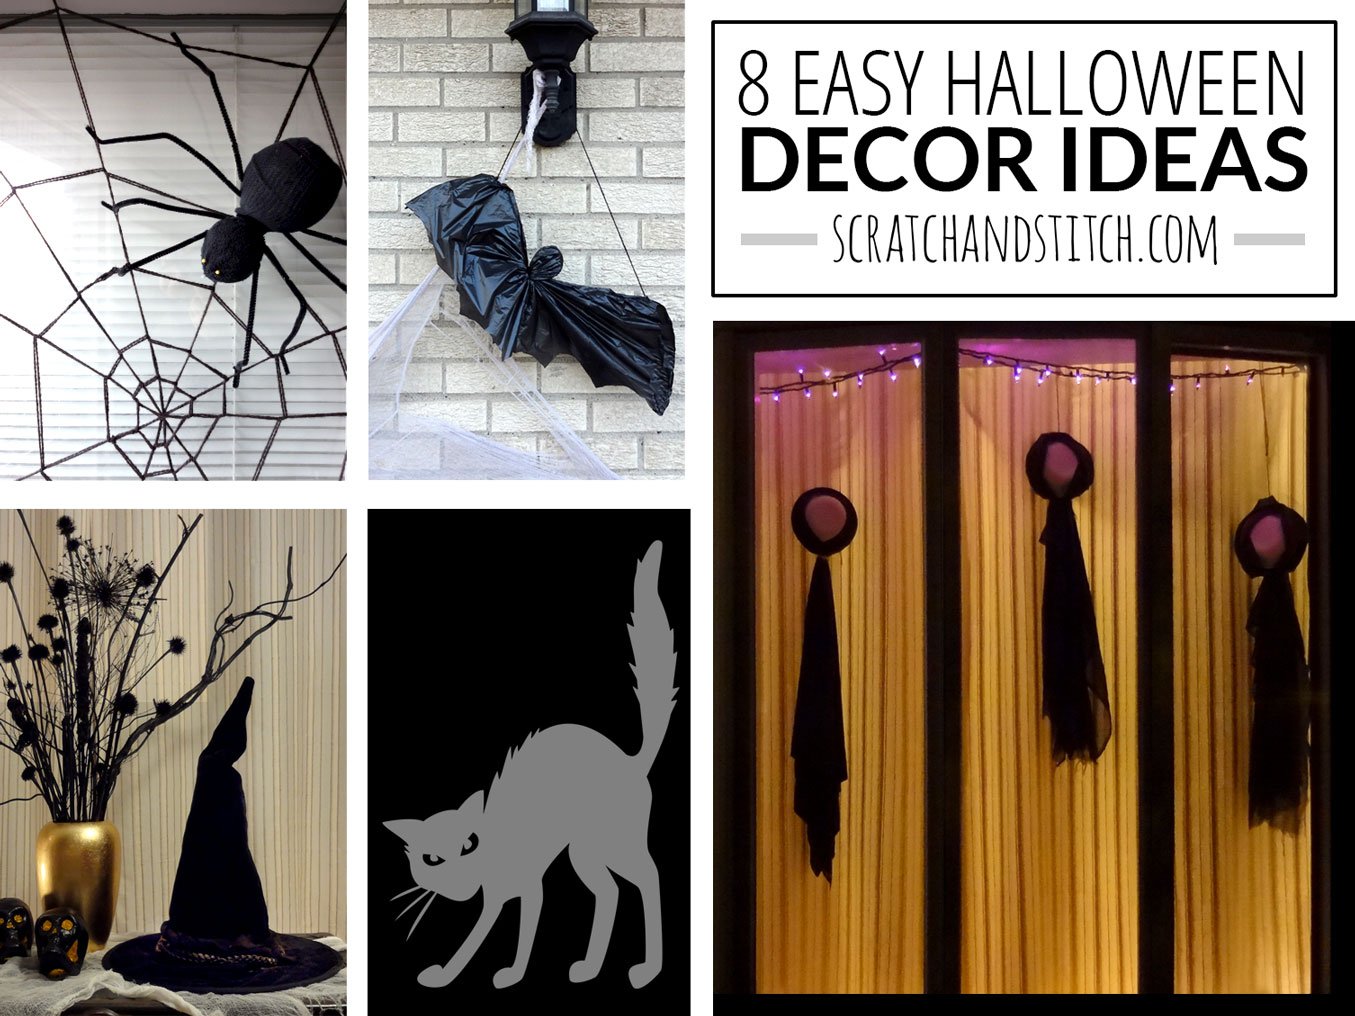 8 Easy Halloween Decor Ideas by scratchandstitch.com